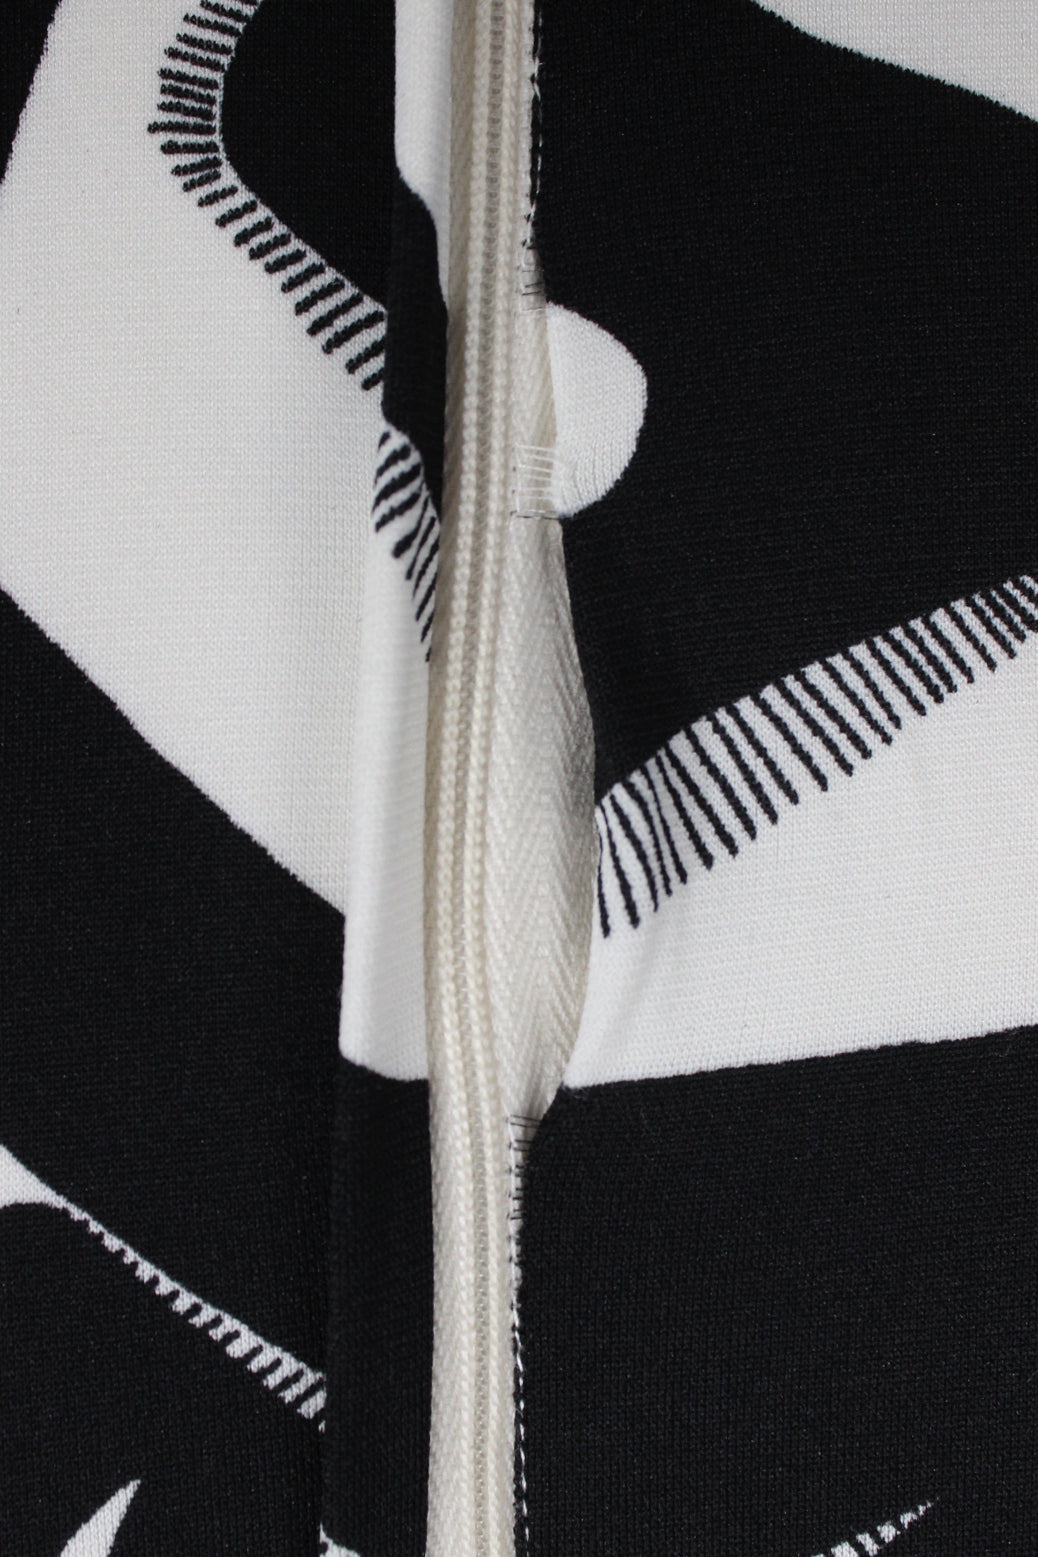 zipper detail of vintage 1970's black and white cheongsam